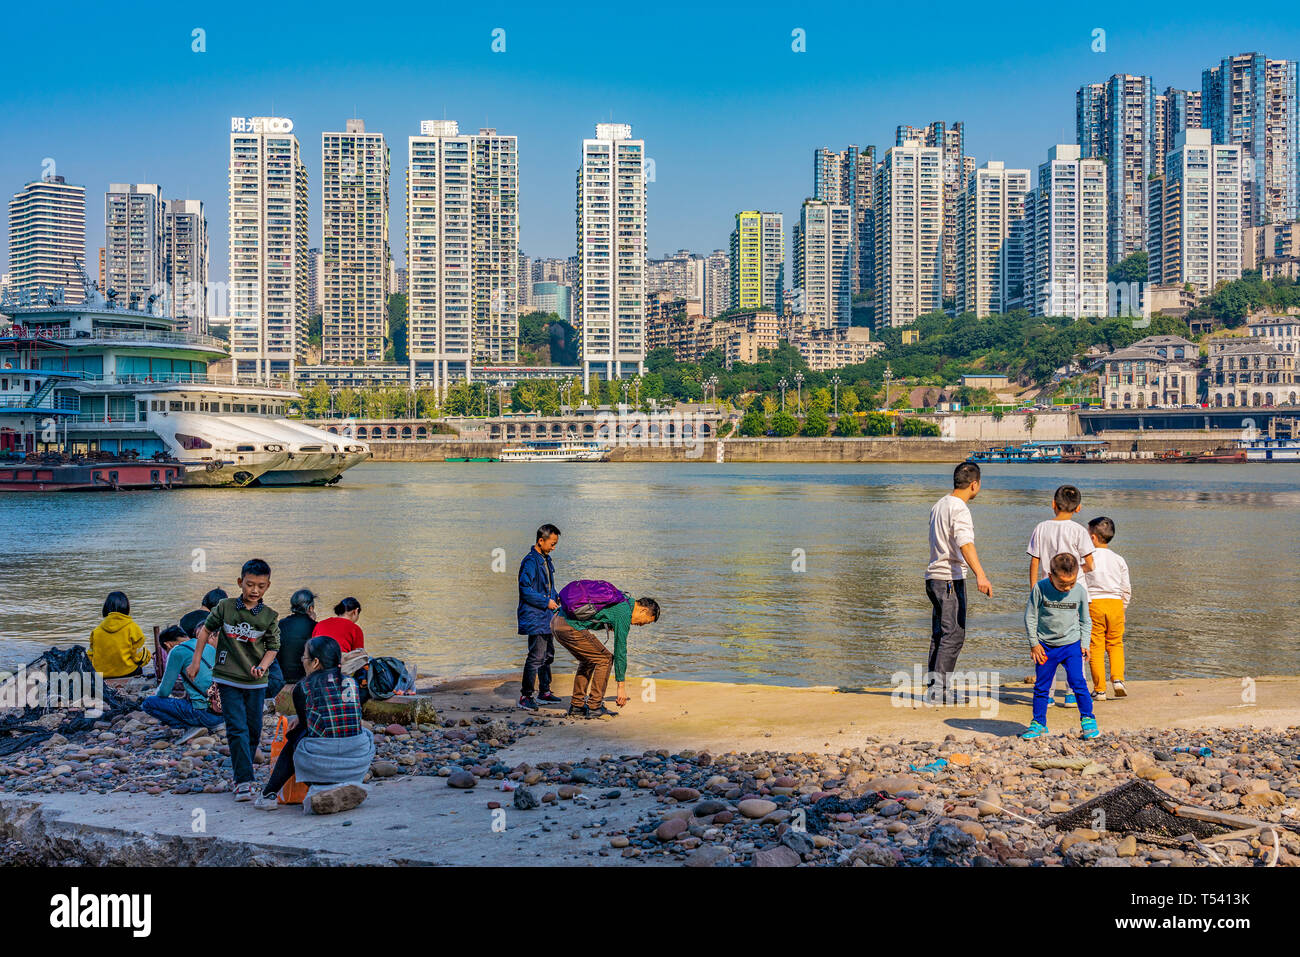 CHONGQING, CHINA - November 03: die Leute von dem Fluss am berühmten Chaotianmen Docks on November 03, 2018 in Chongqing Stockfoto